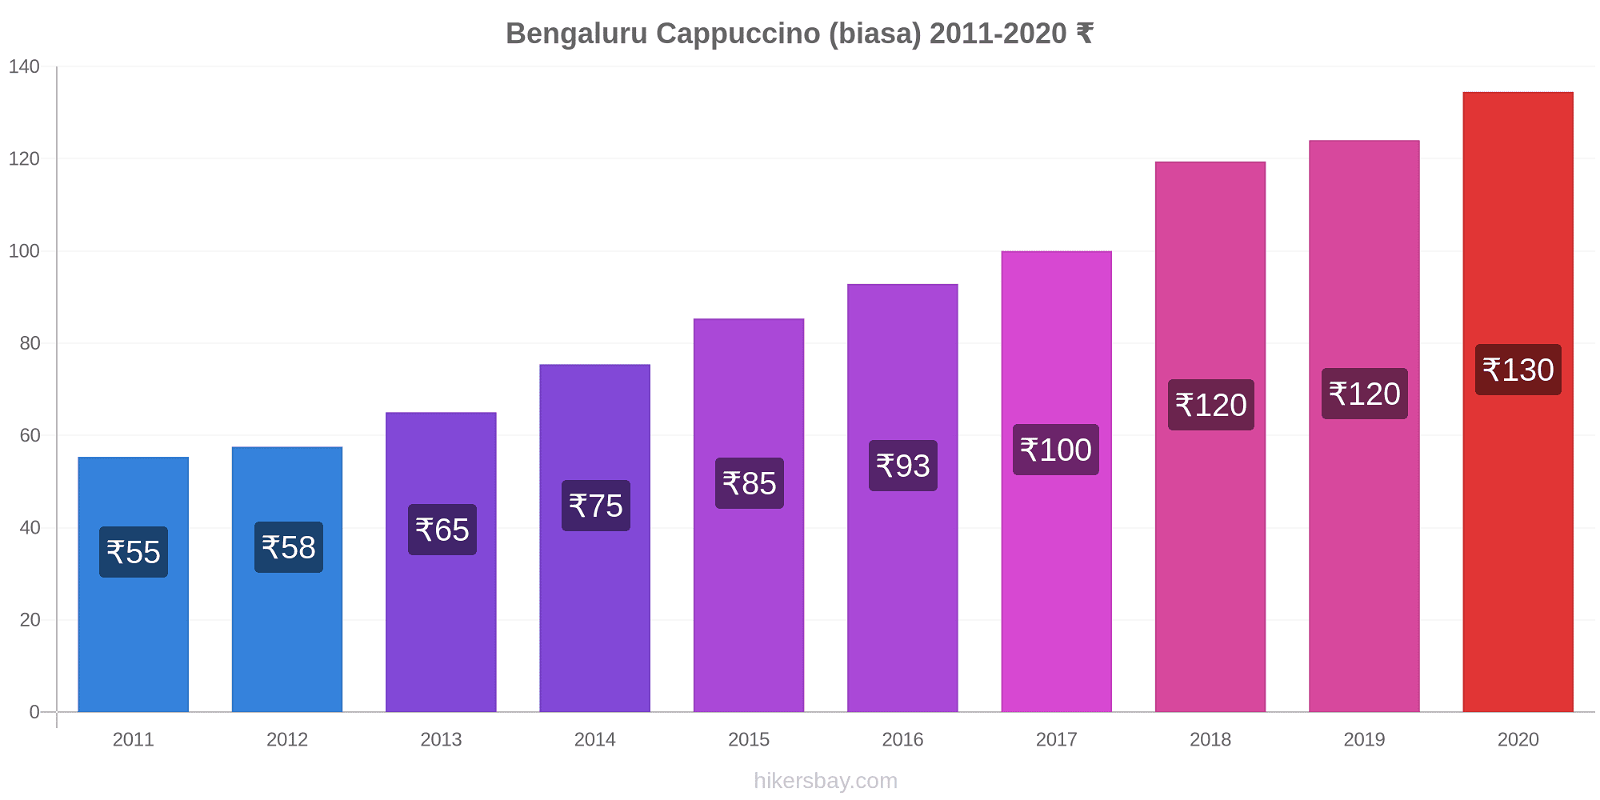 Bengaluru perubahan harga Cappuccino (biasa) hikersbay.com